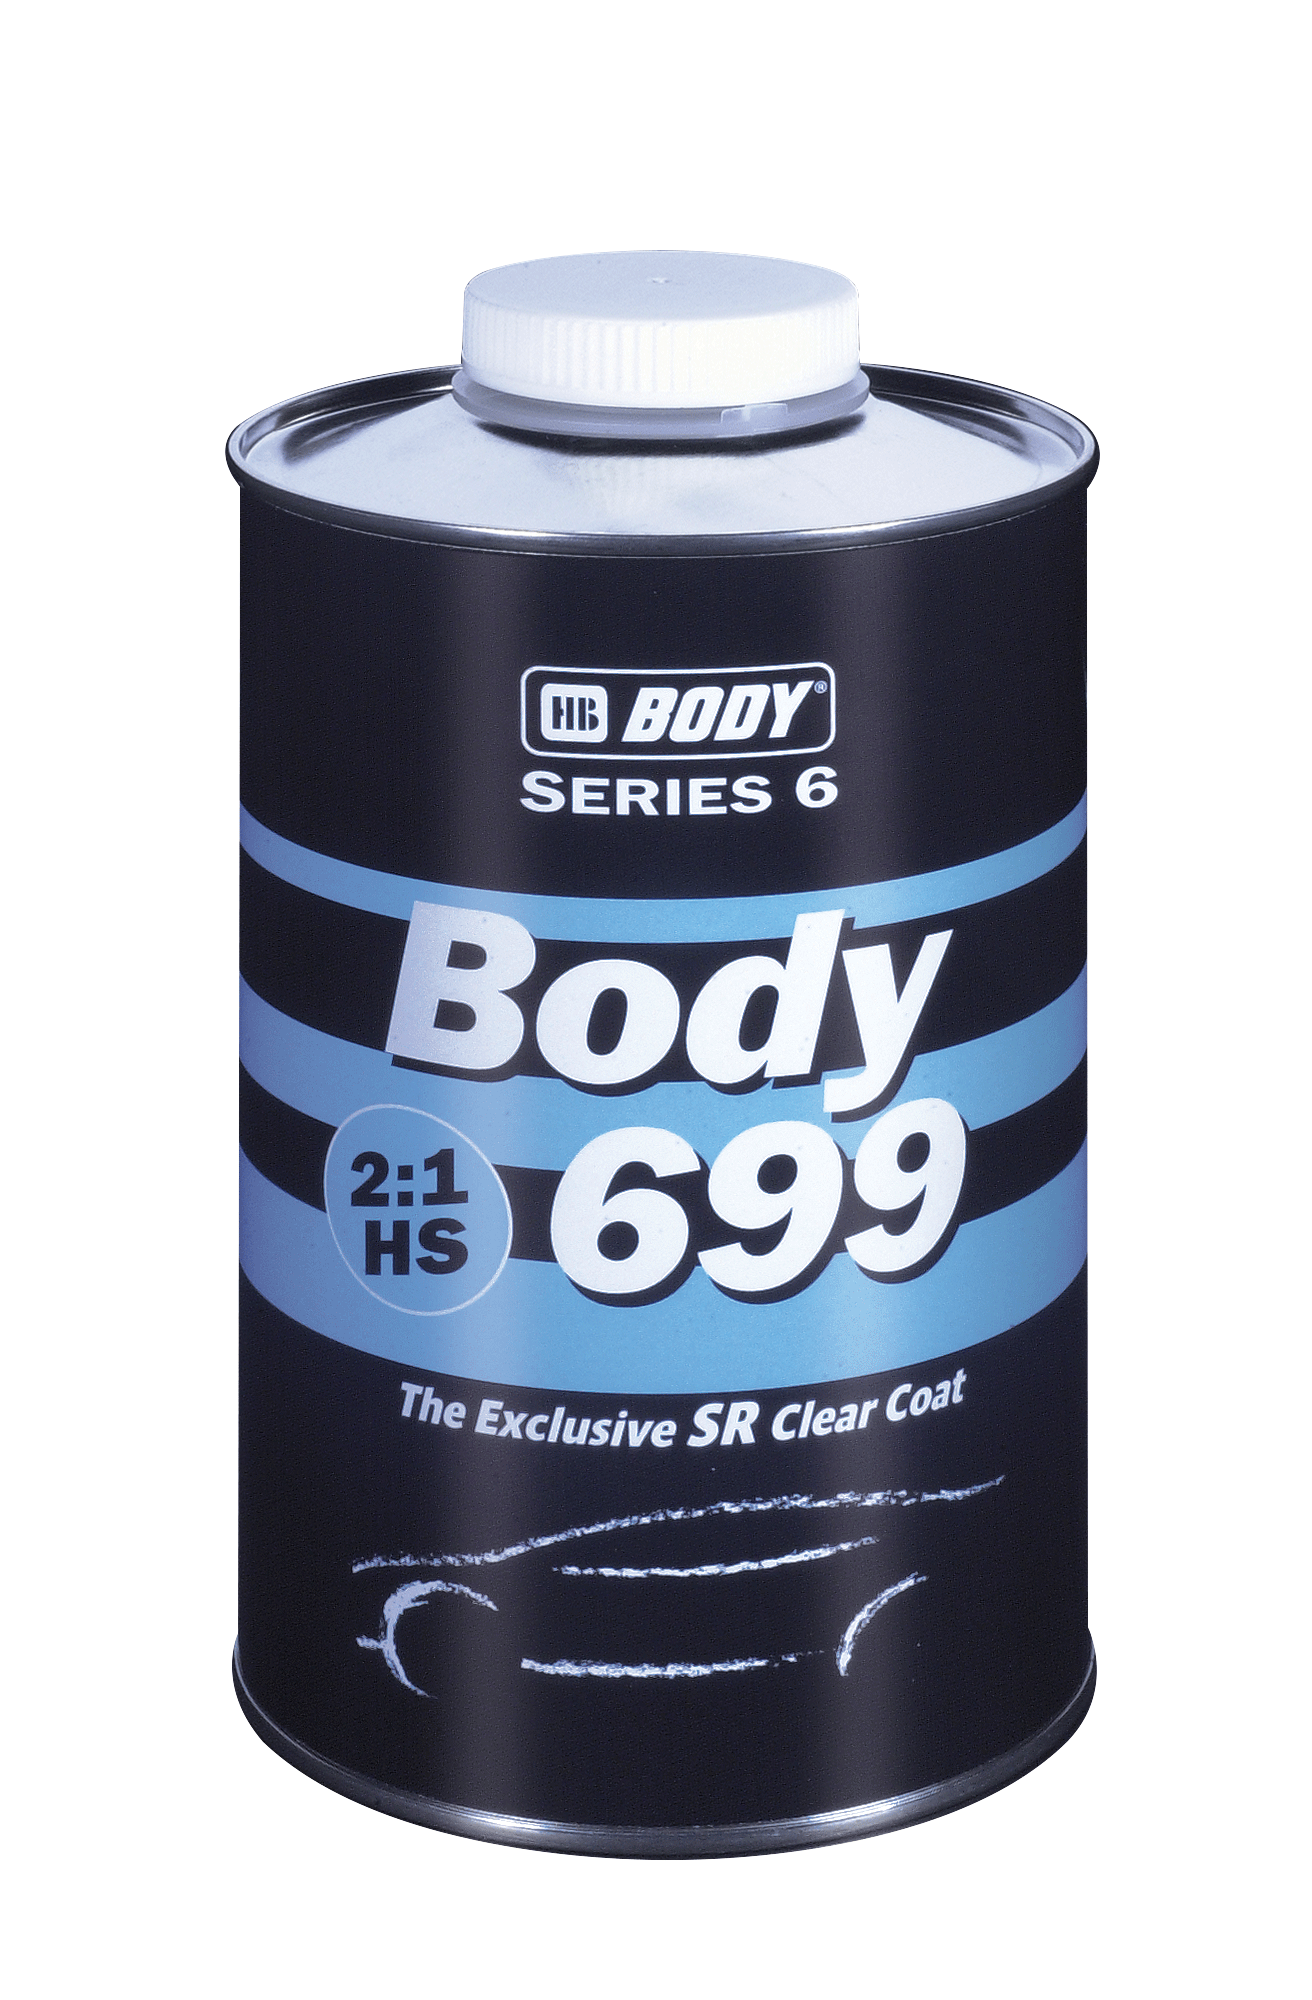 HB BODY Body 699 2:1 HS Clearc SR RAL9005,500g